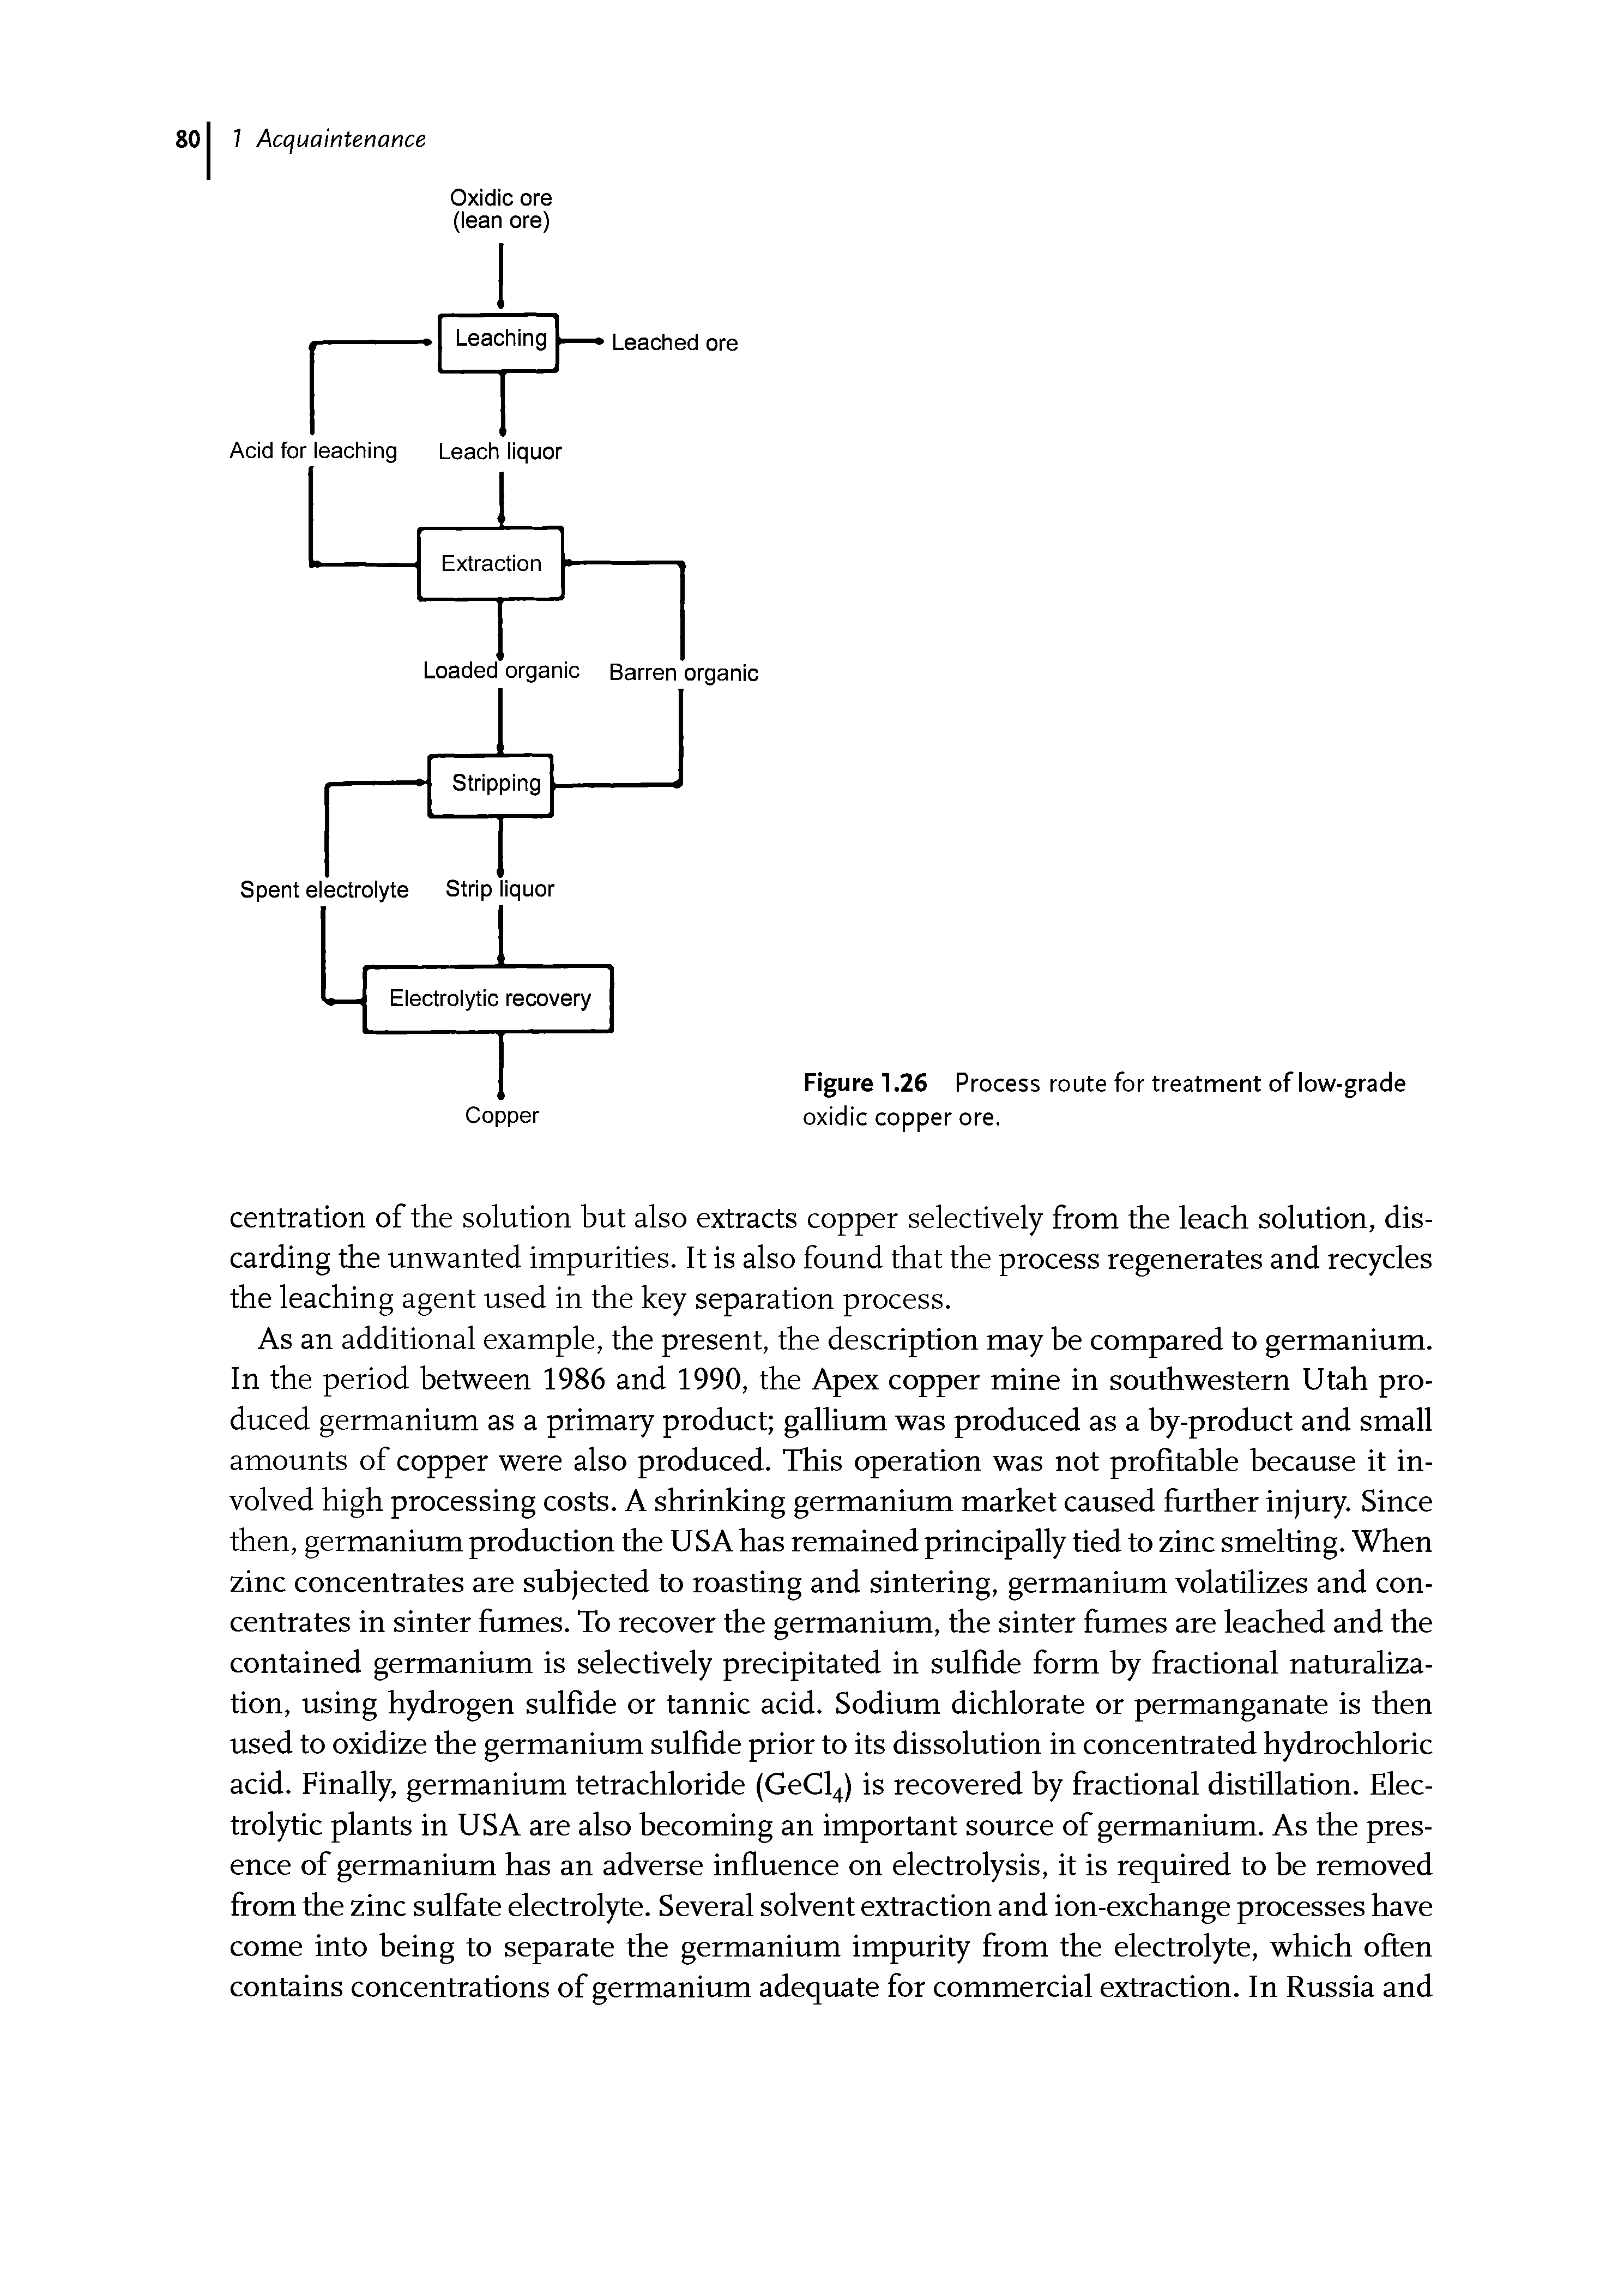 Figure 1.26 Process route for treatment of low-grade oxidic copper ore.